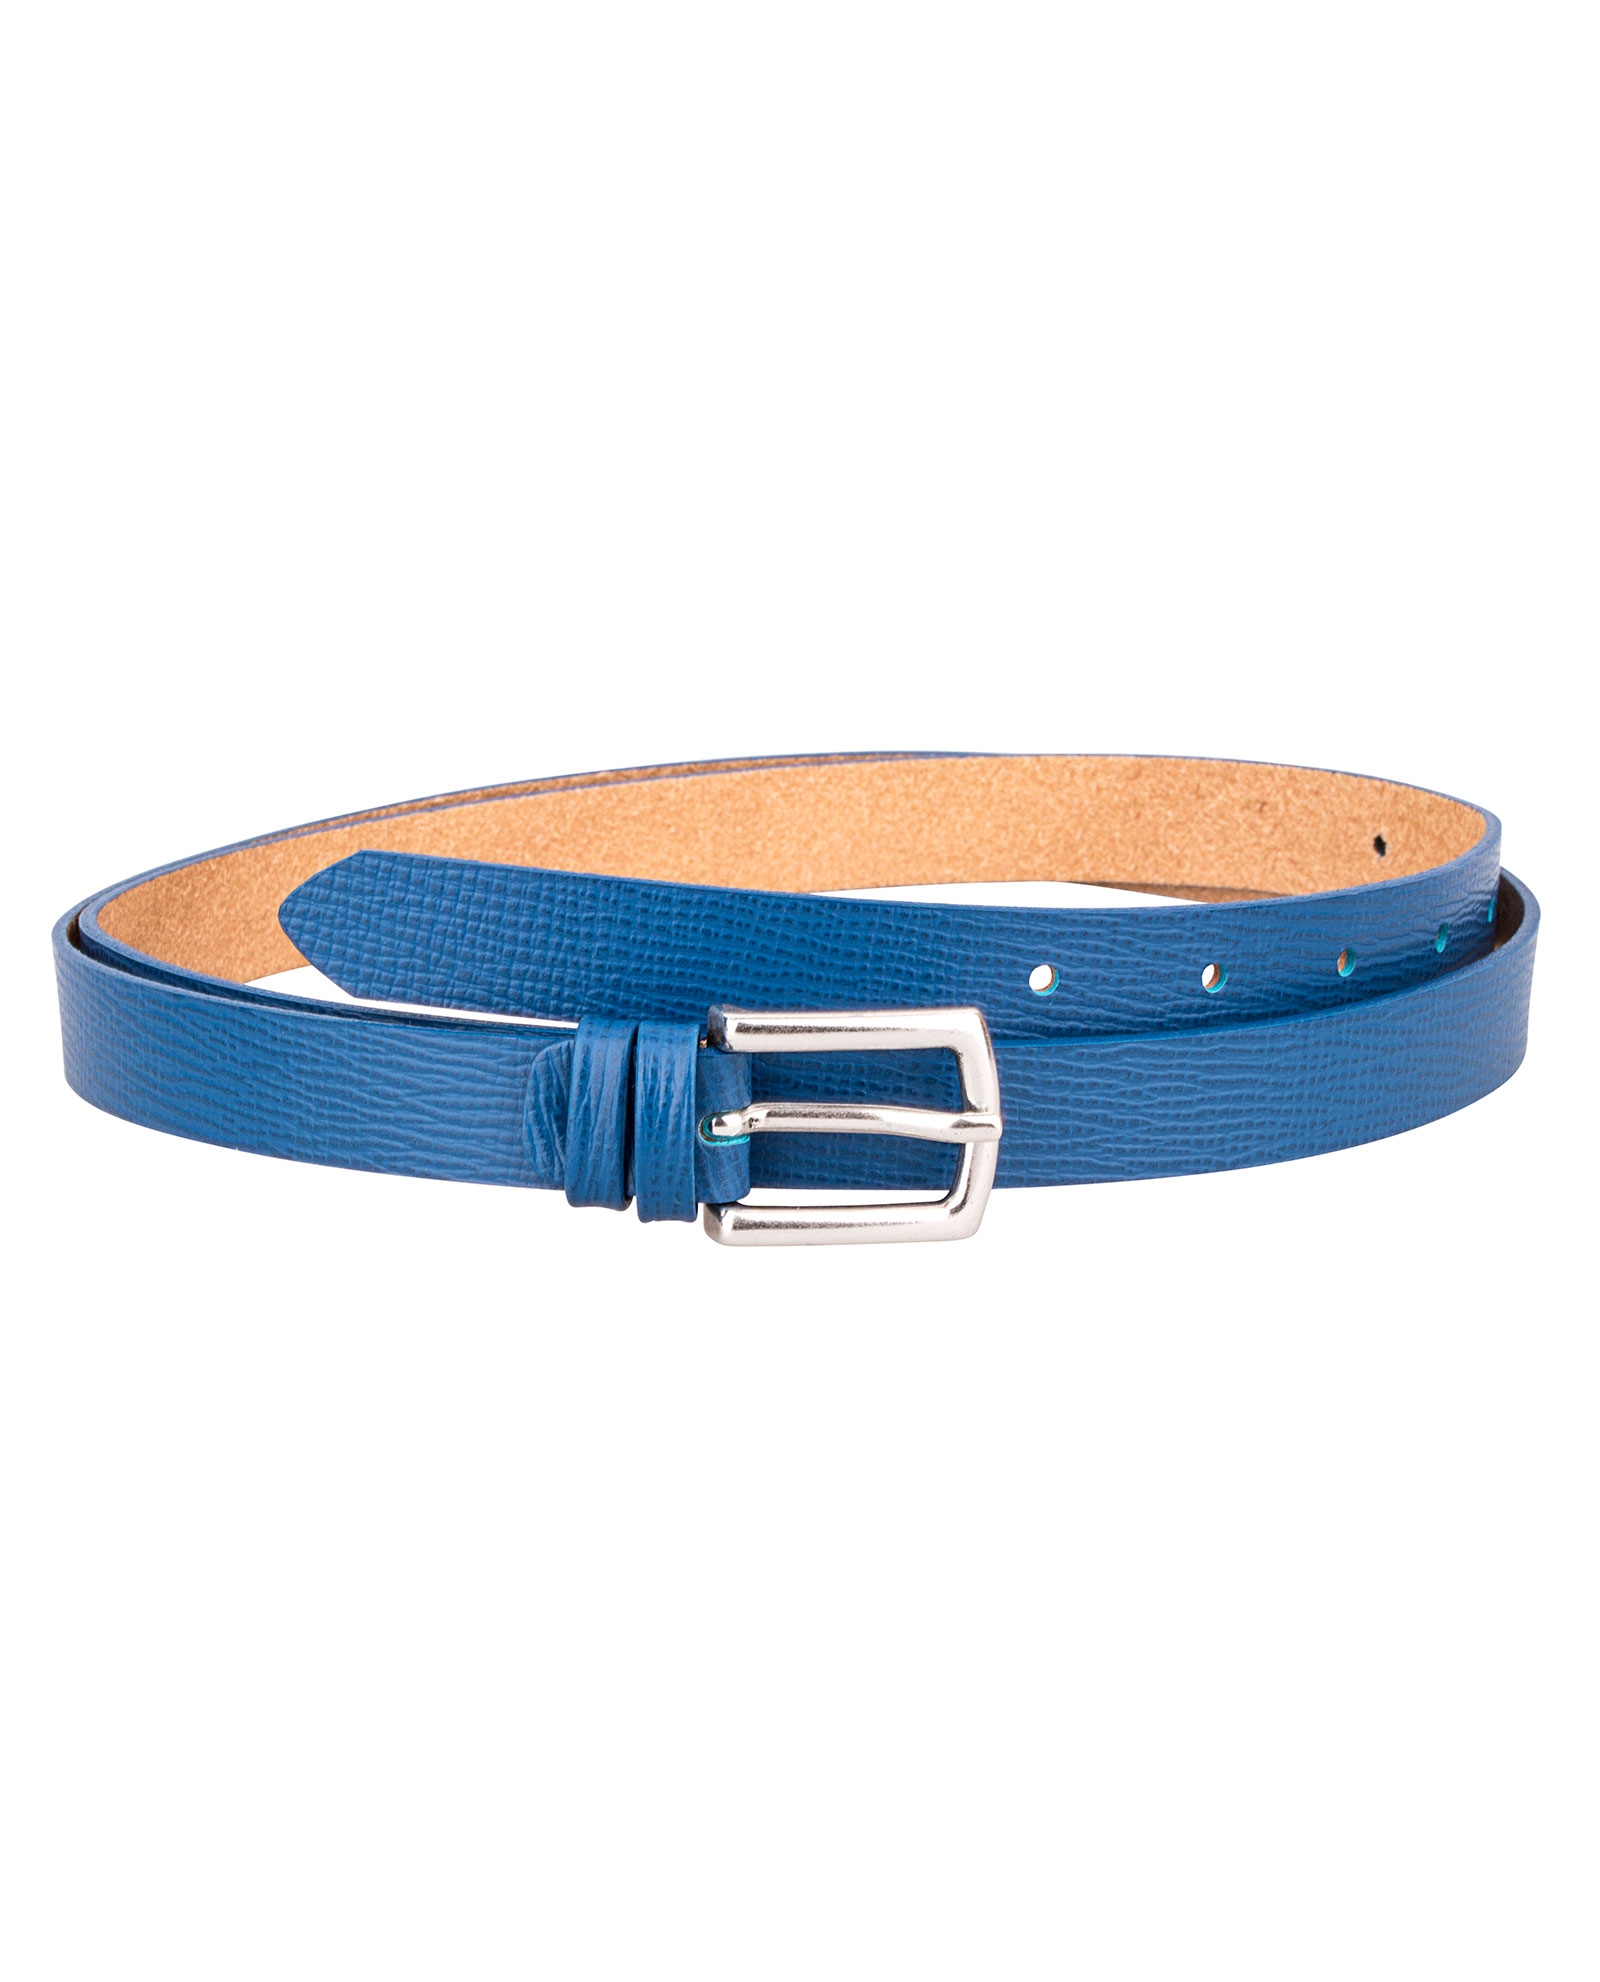 Buy Blue Women's Belts for Dresses - LeatherBeltsOnline.com - Free Shipping